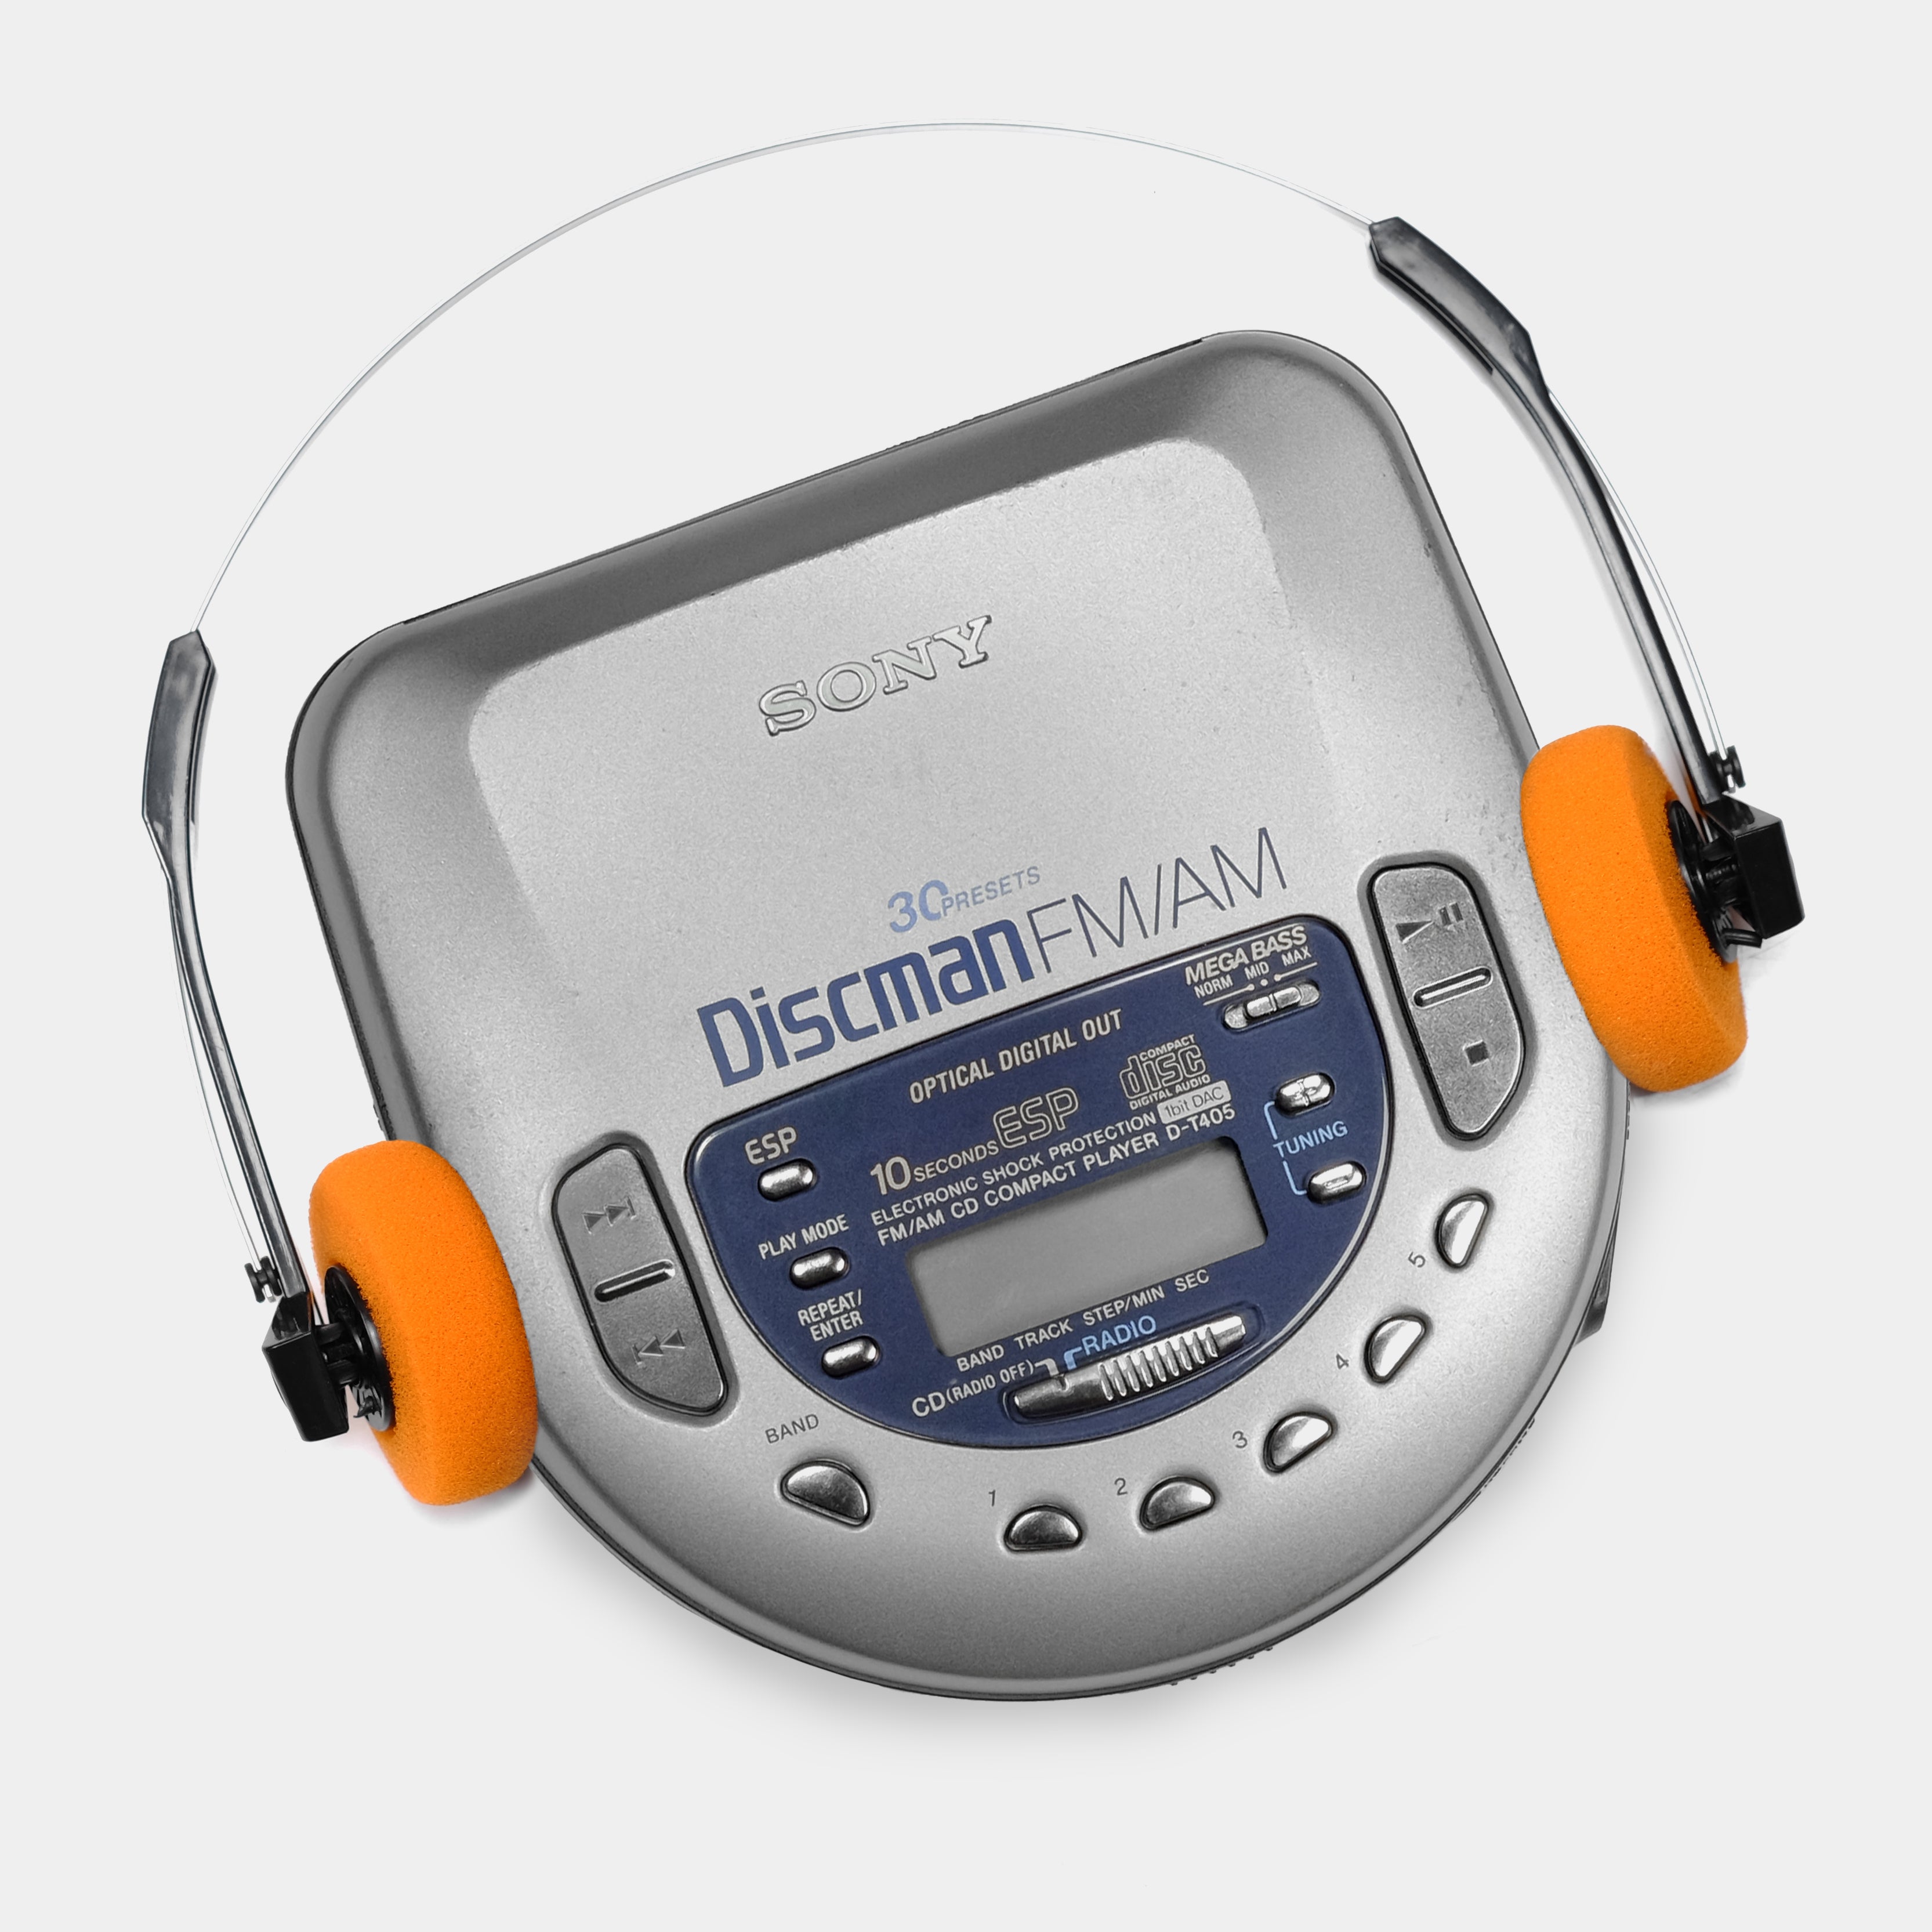 Sony Discman D-T405 Portable CD Player